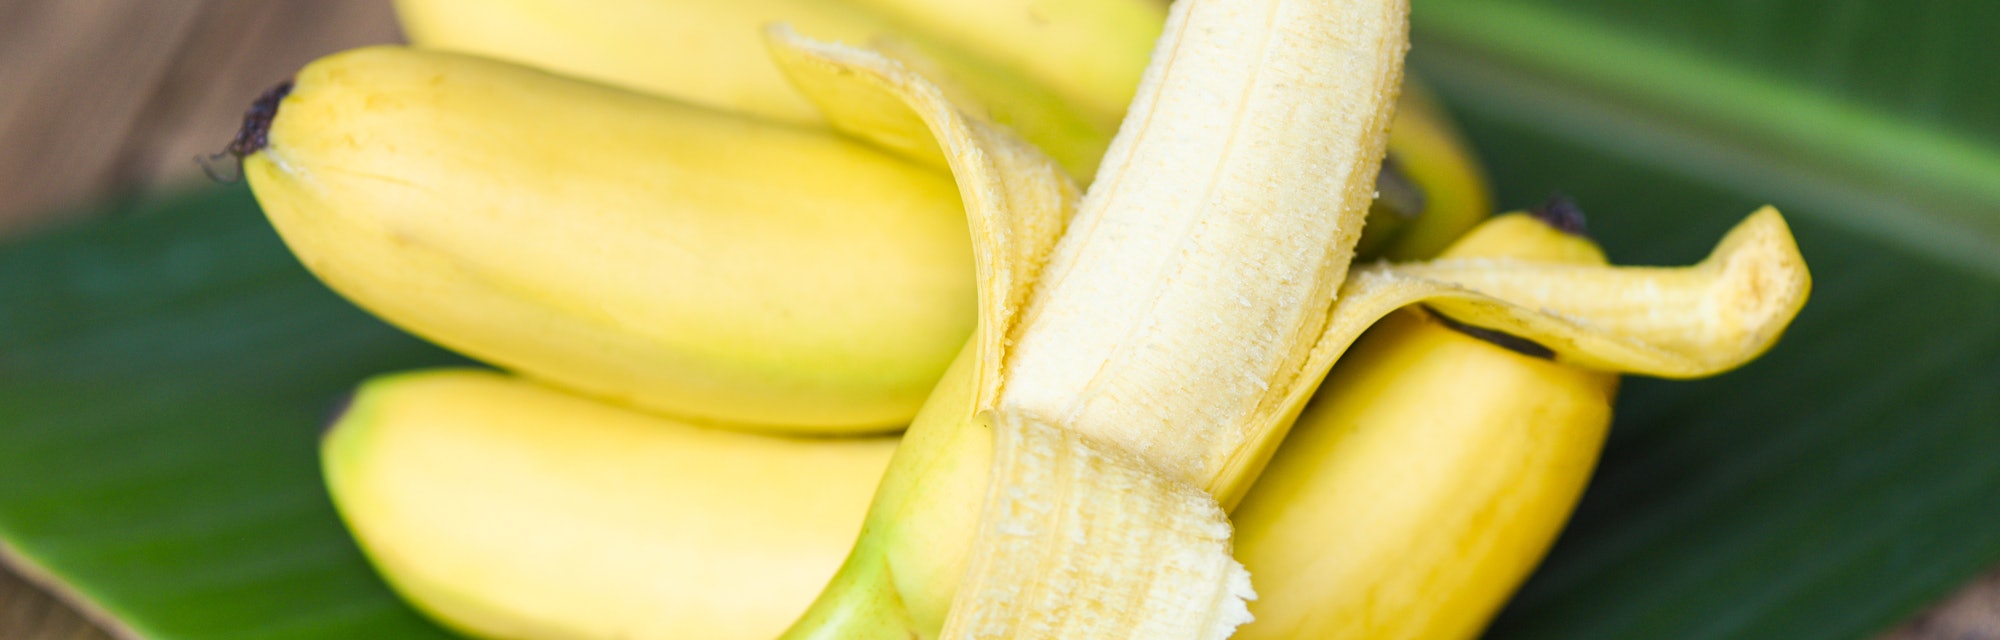 Banana peel ready to eat and ripe banana fruit on banana leaf background